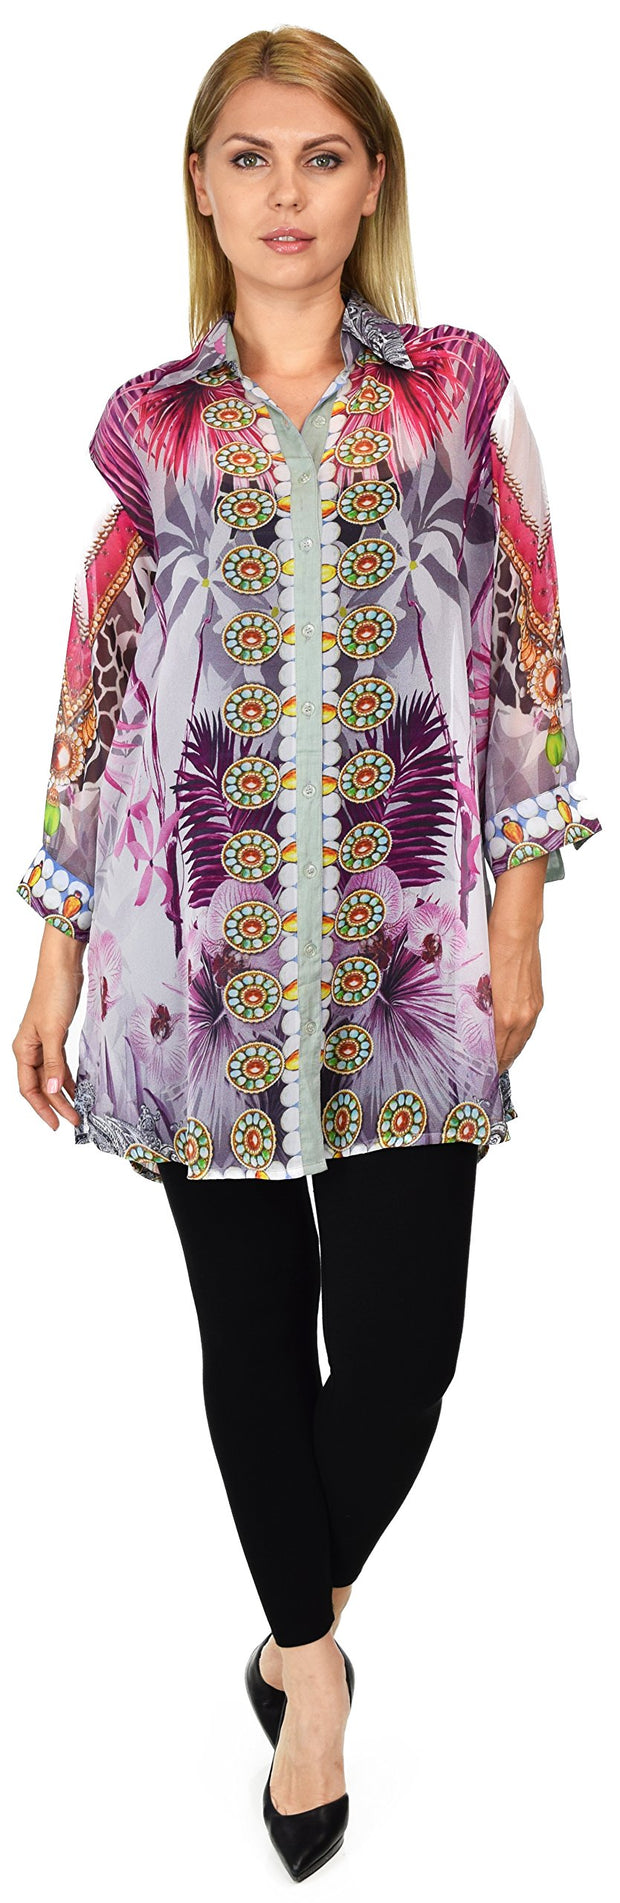 Artsy Semi Sheer Blouse, Chiffon Blouse,Button Down Blouse, Collared Exotic Print Shirt